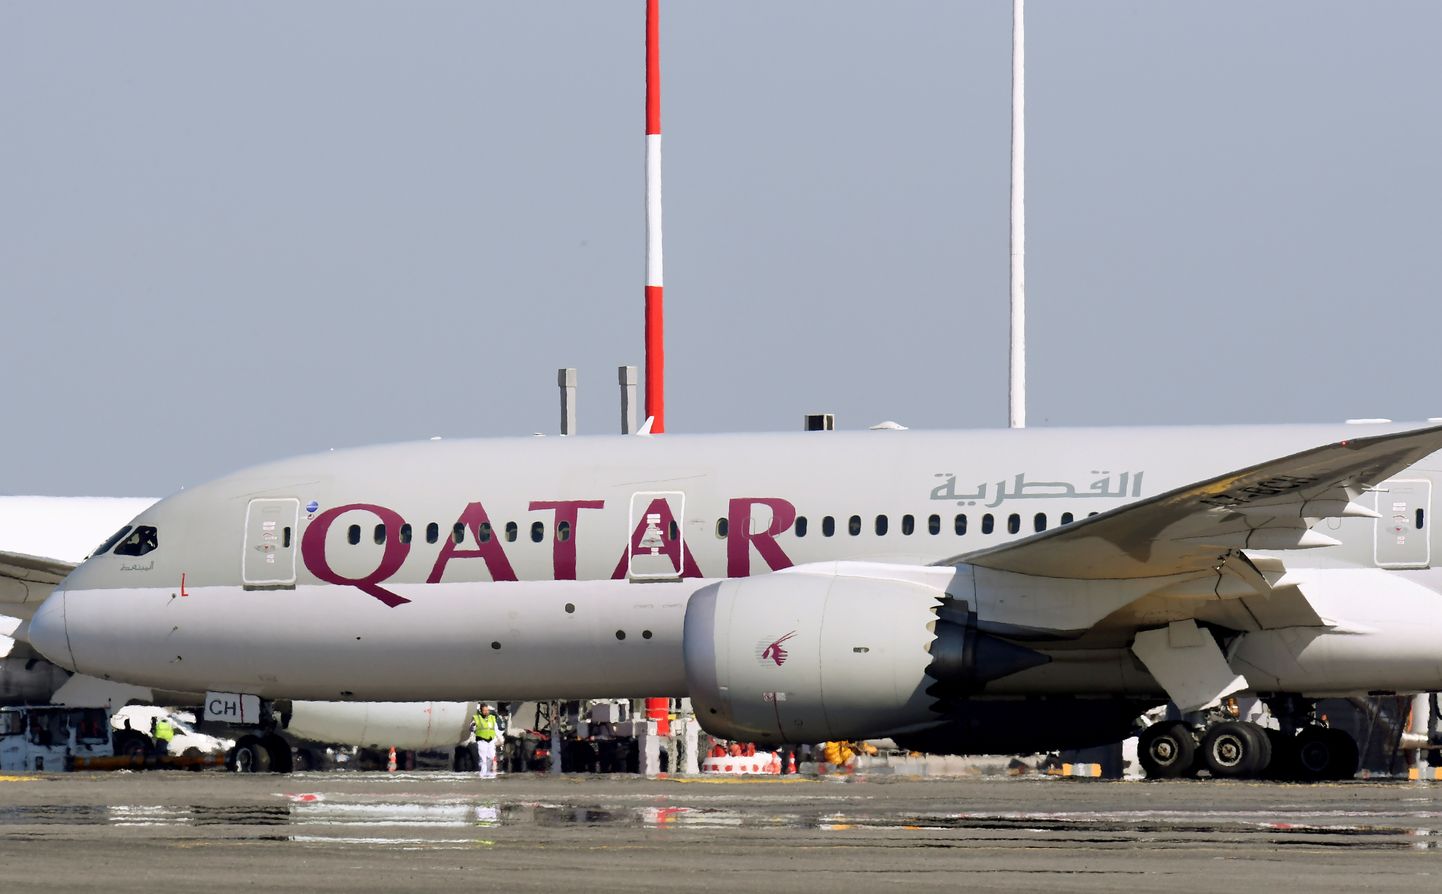 Lennufirma Qatar Airways lennuk.